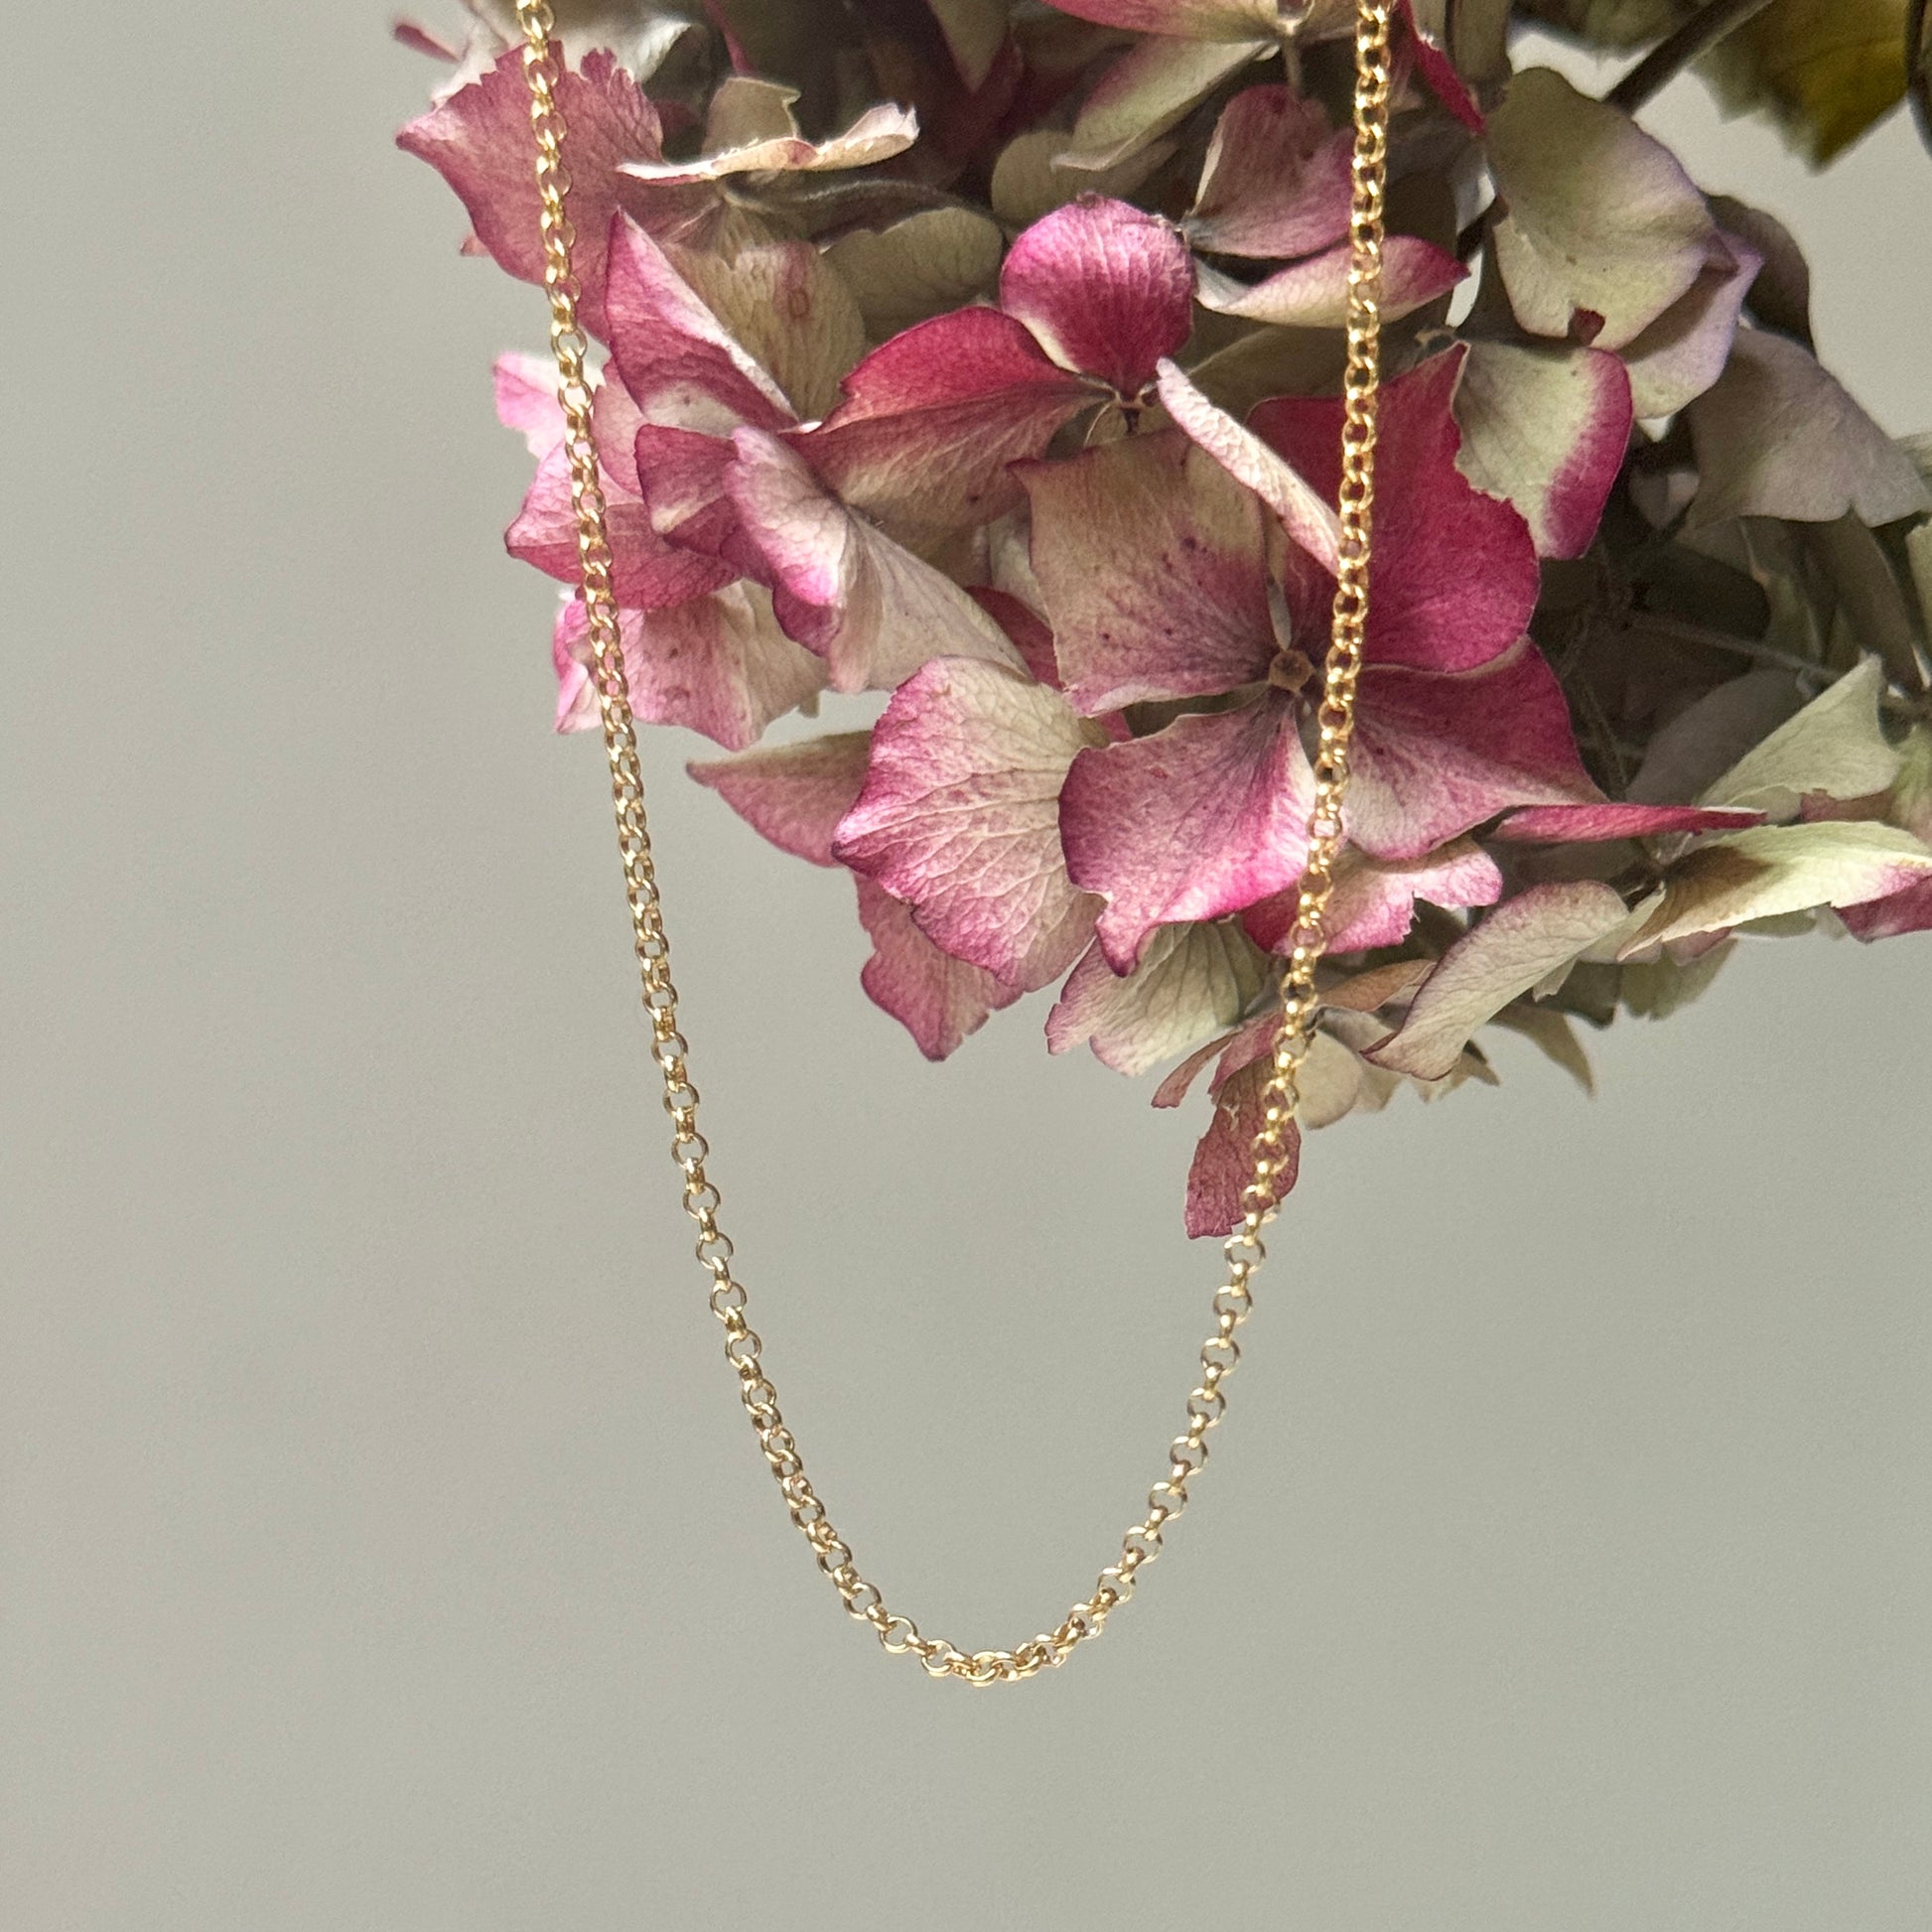 Freshwater Pearl (Midi Bead) Pendant Necklace